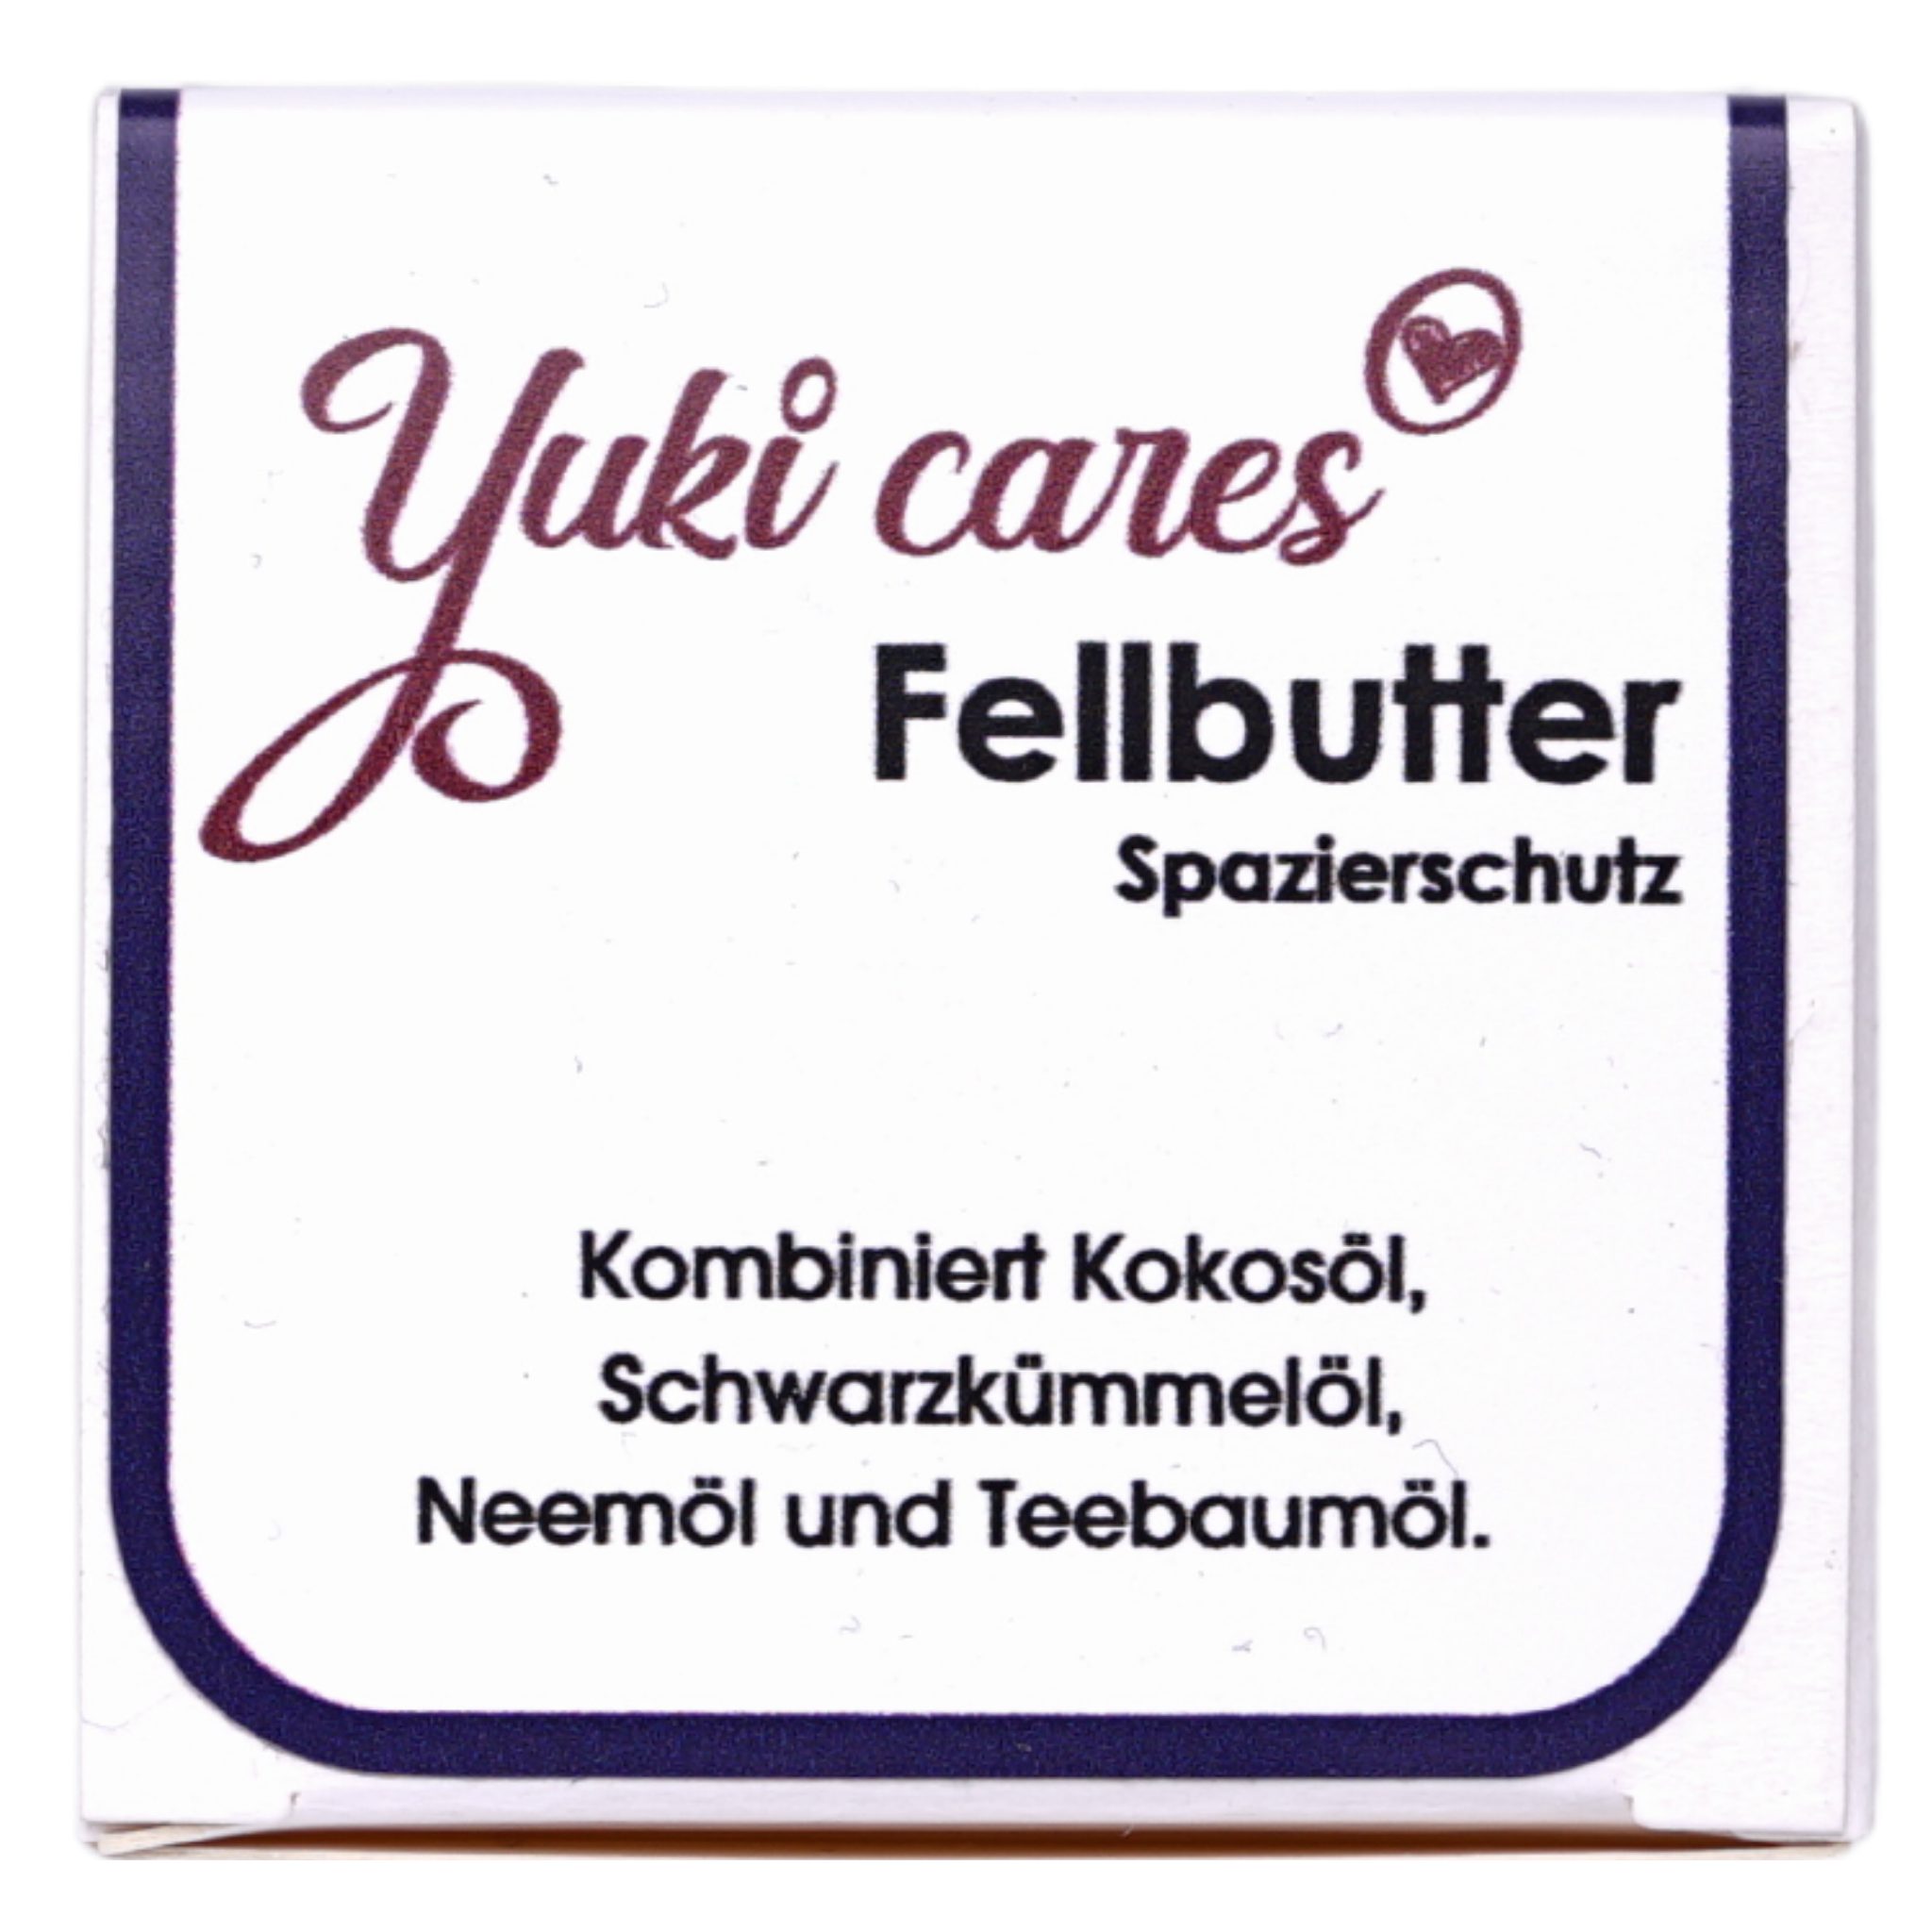 Yuki cares Fellpflege Fellbutter Spazierschutz gegen Zecken & Flöhe, 12 ml